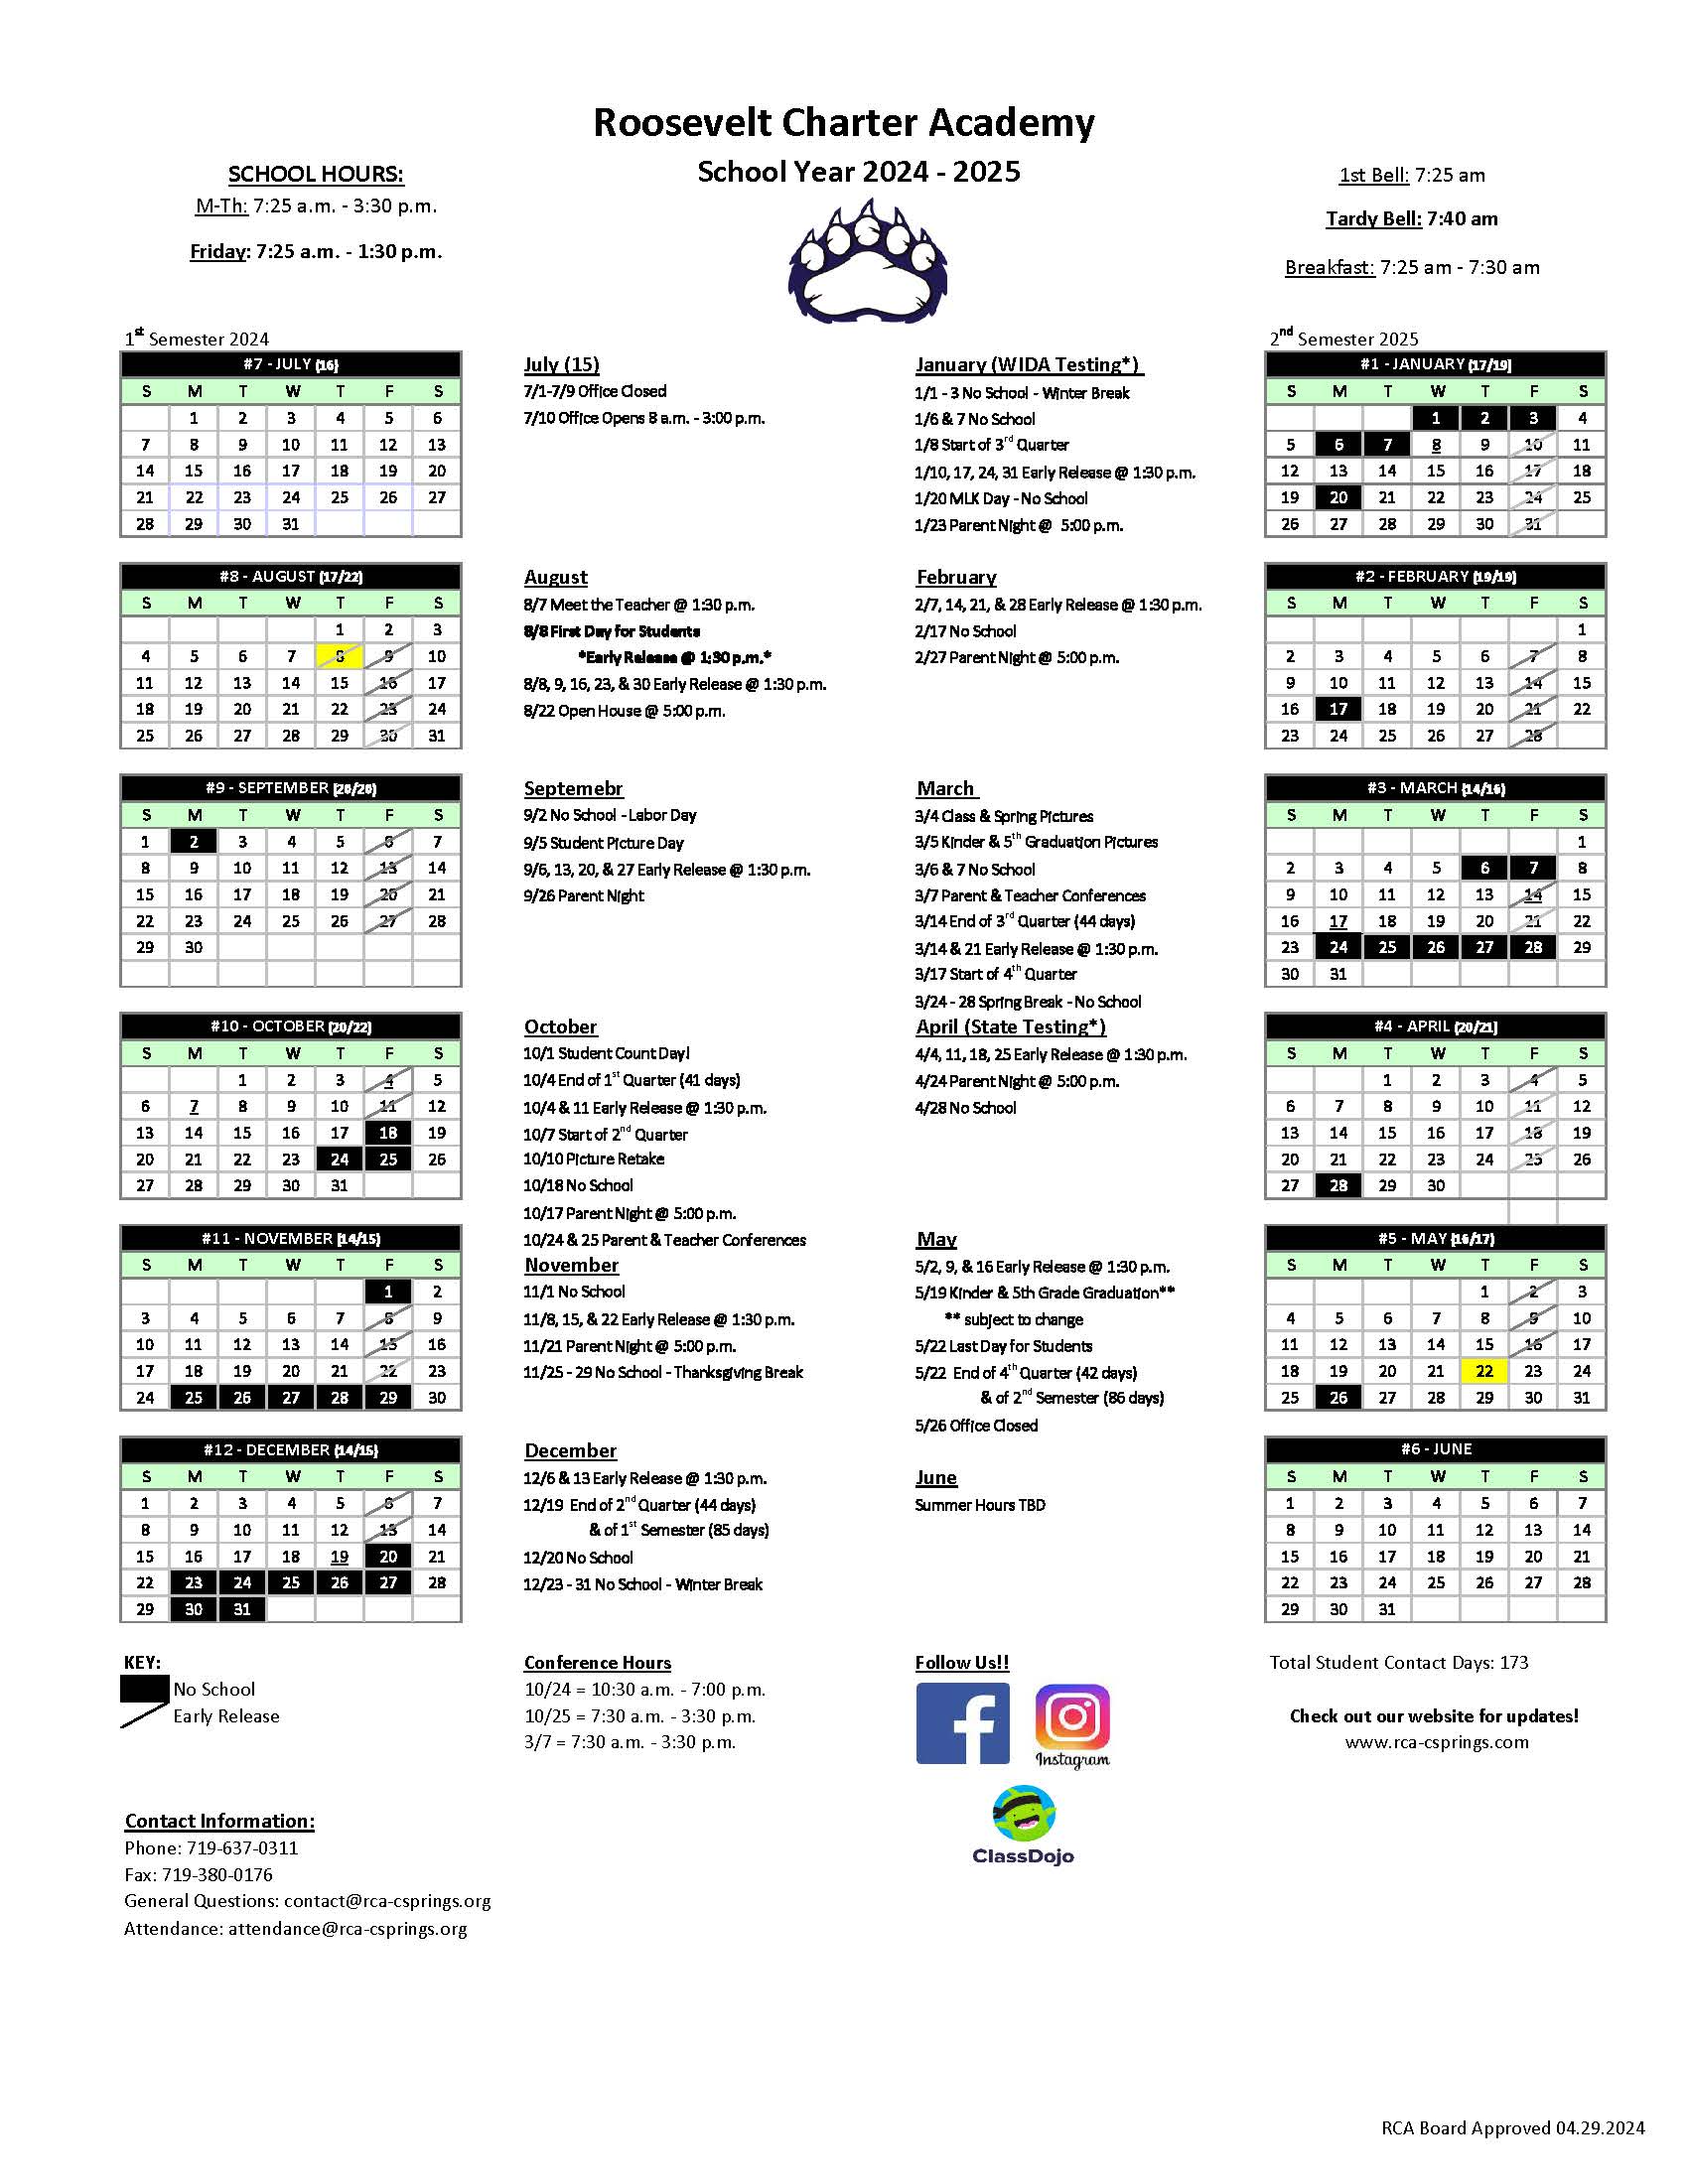 Public Calendar